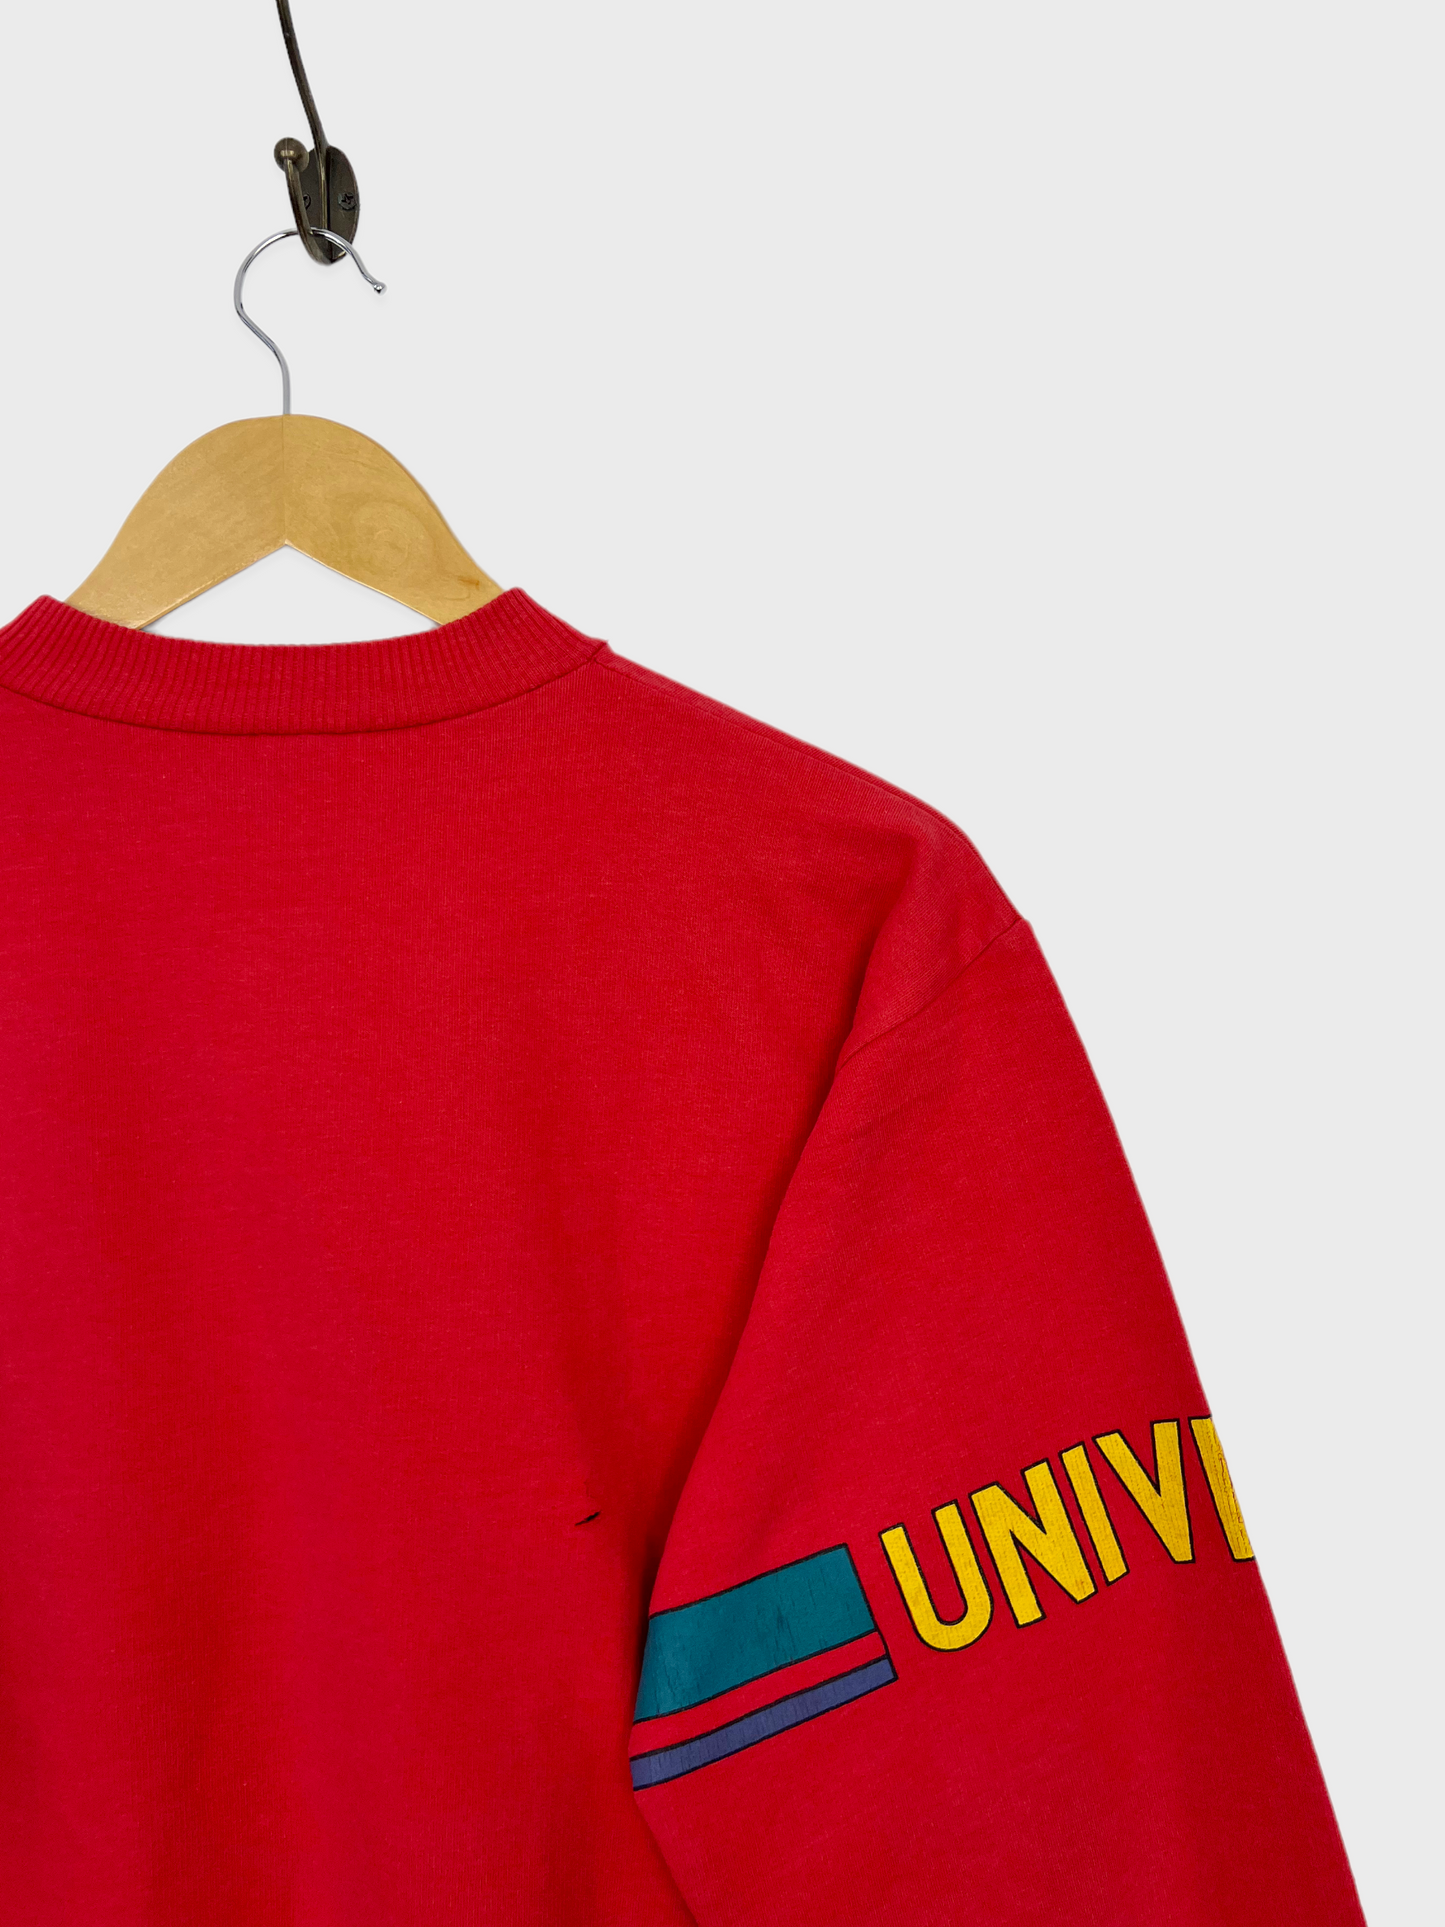 90's Live Sportswear Graphic Vintage Sweatshirt Size 6-8